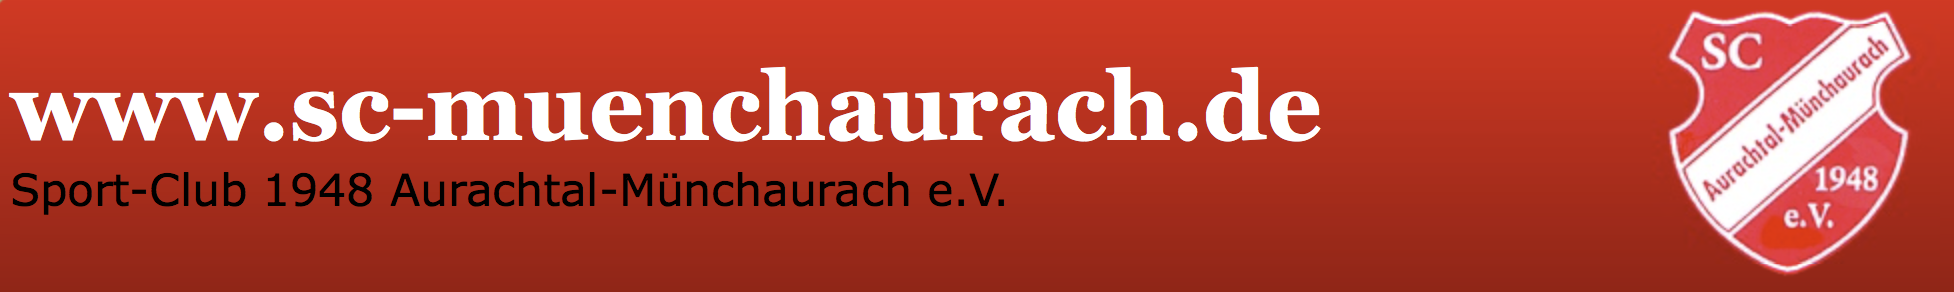 SC Münchaurach 1948 e.V. Mobile Logo